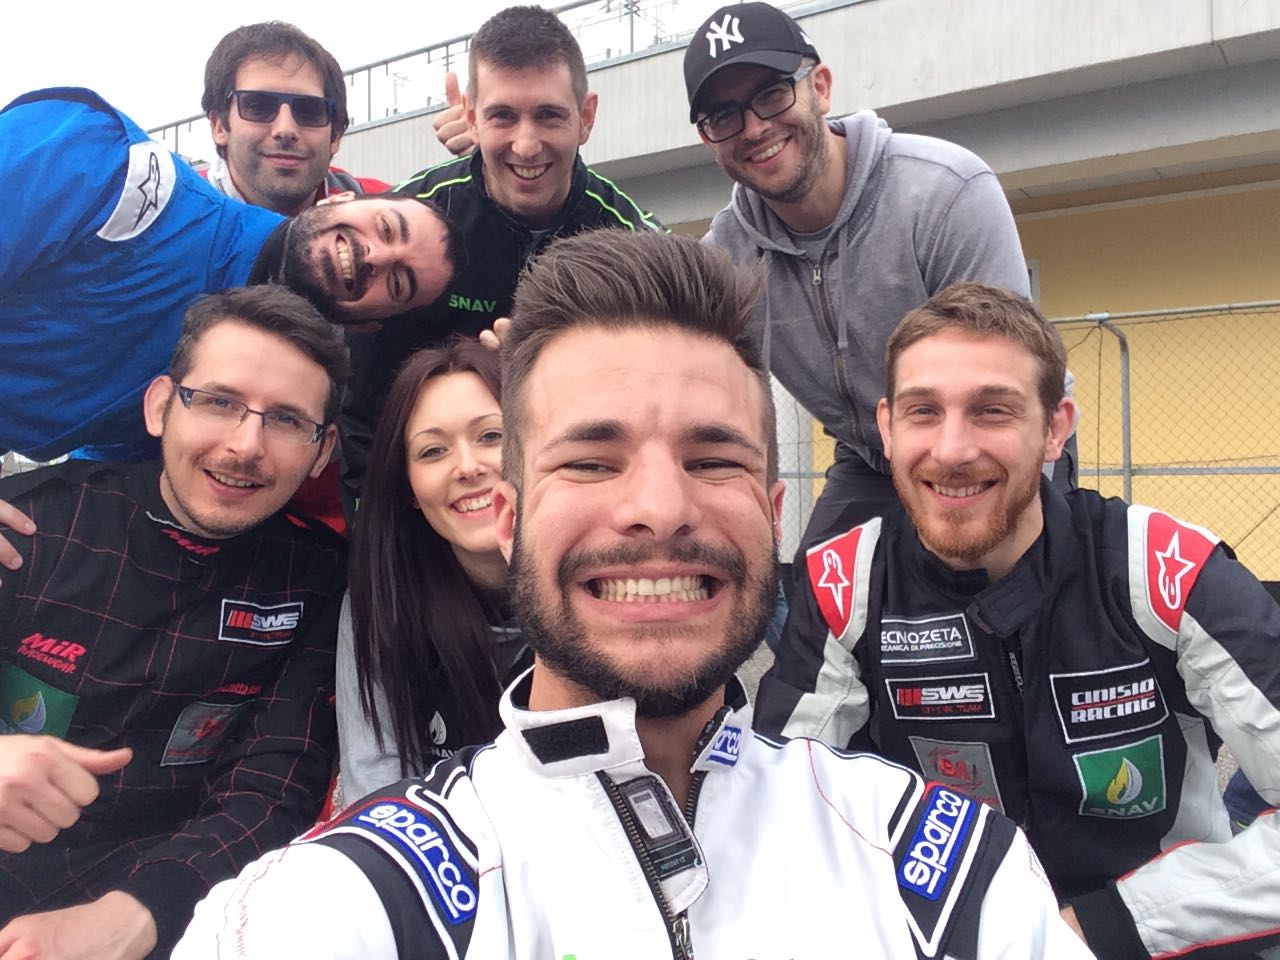 8h Ala di Trento - Foto di gruppo Cinisio Racing